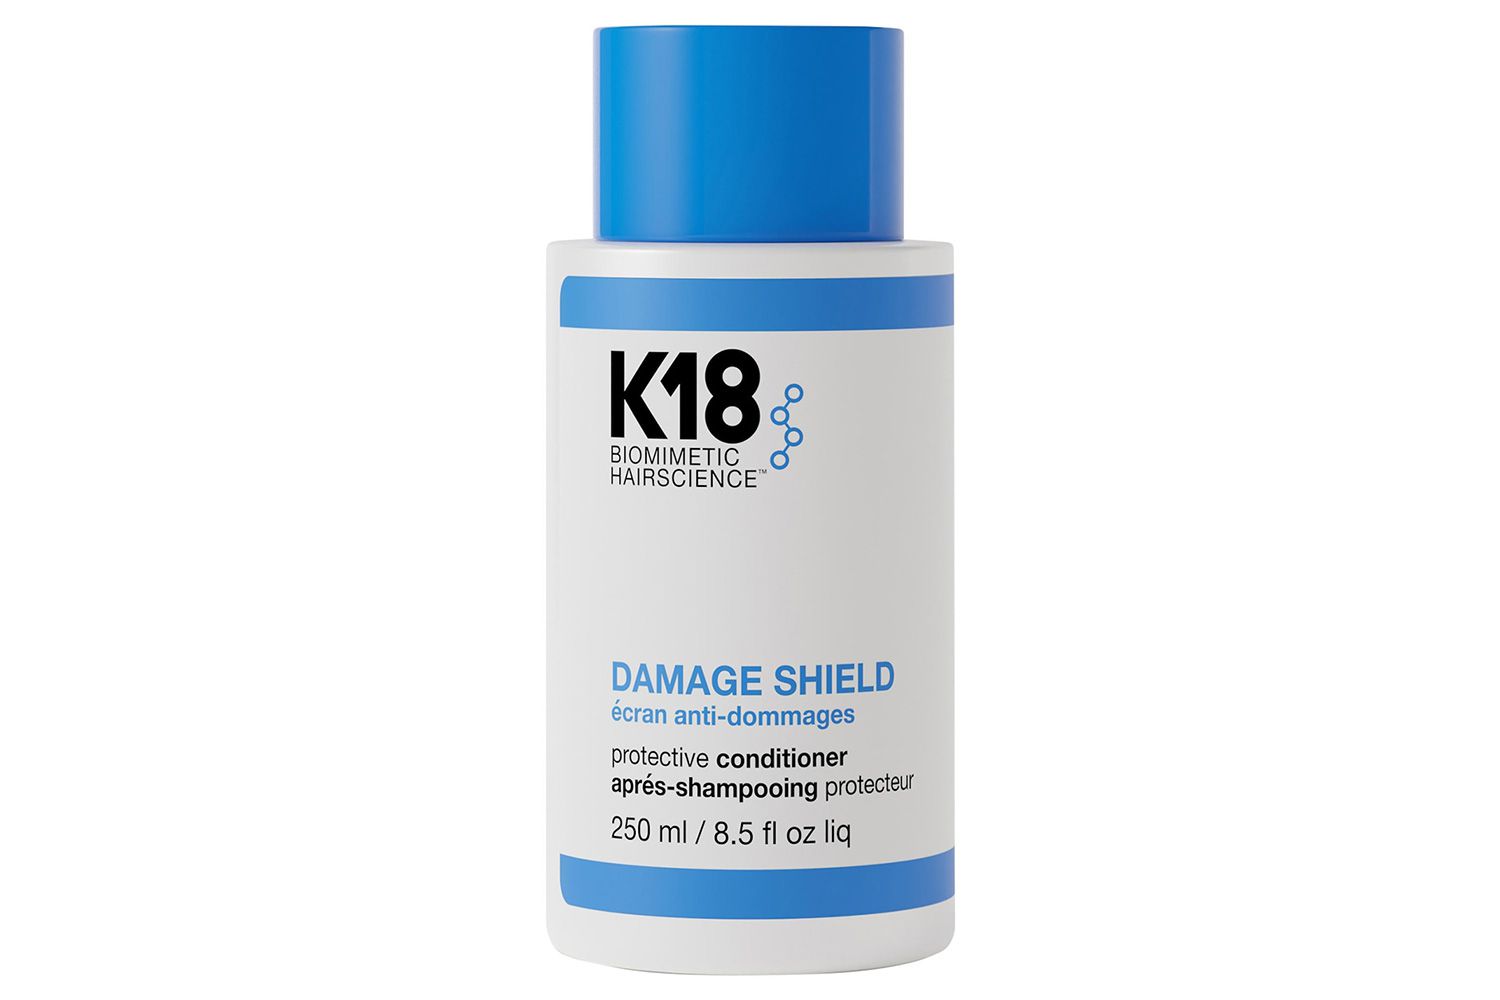 Sephora K18 Biomimetic Hairscience DAMAGE SHIELD Protective Conditioner